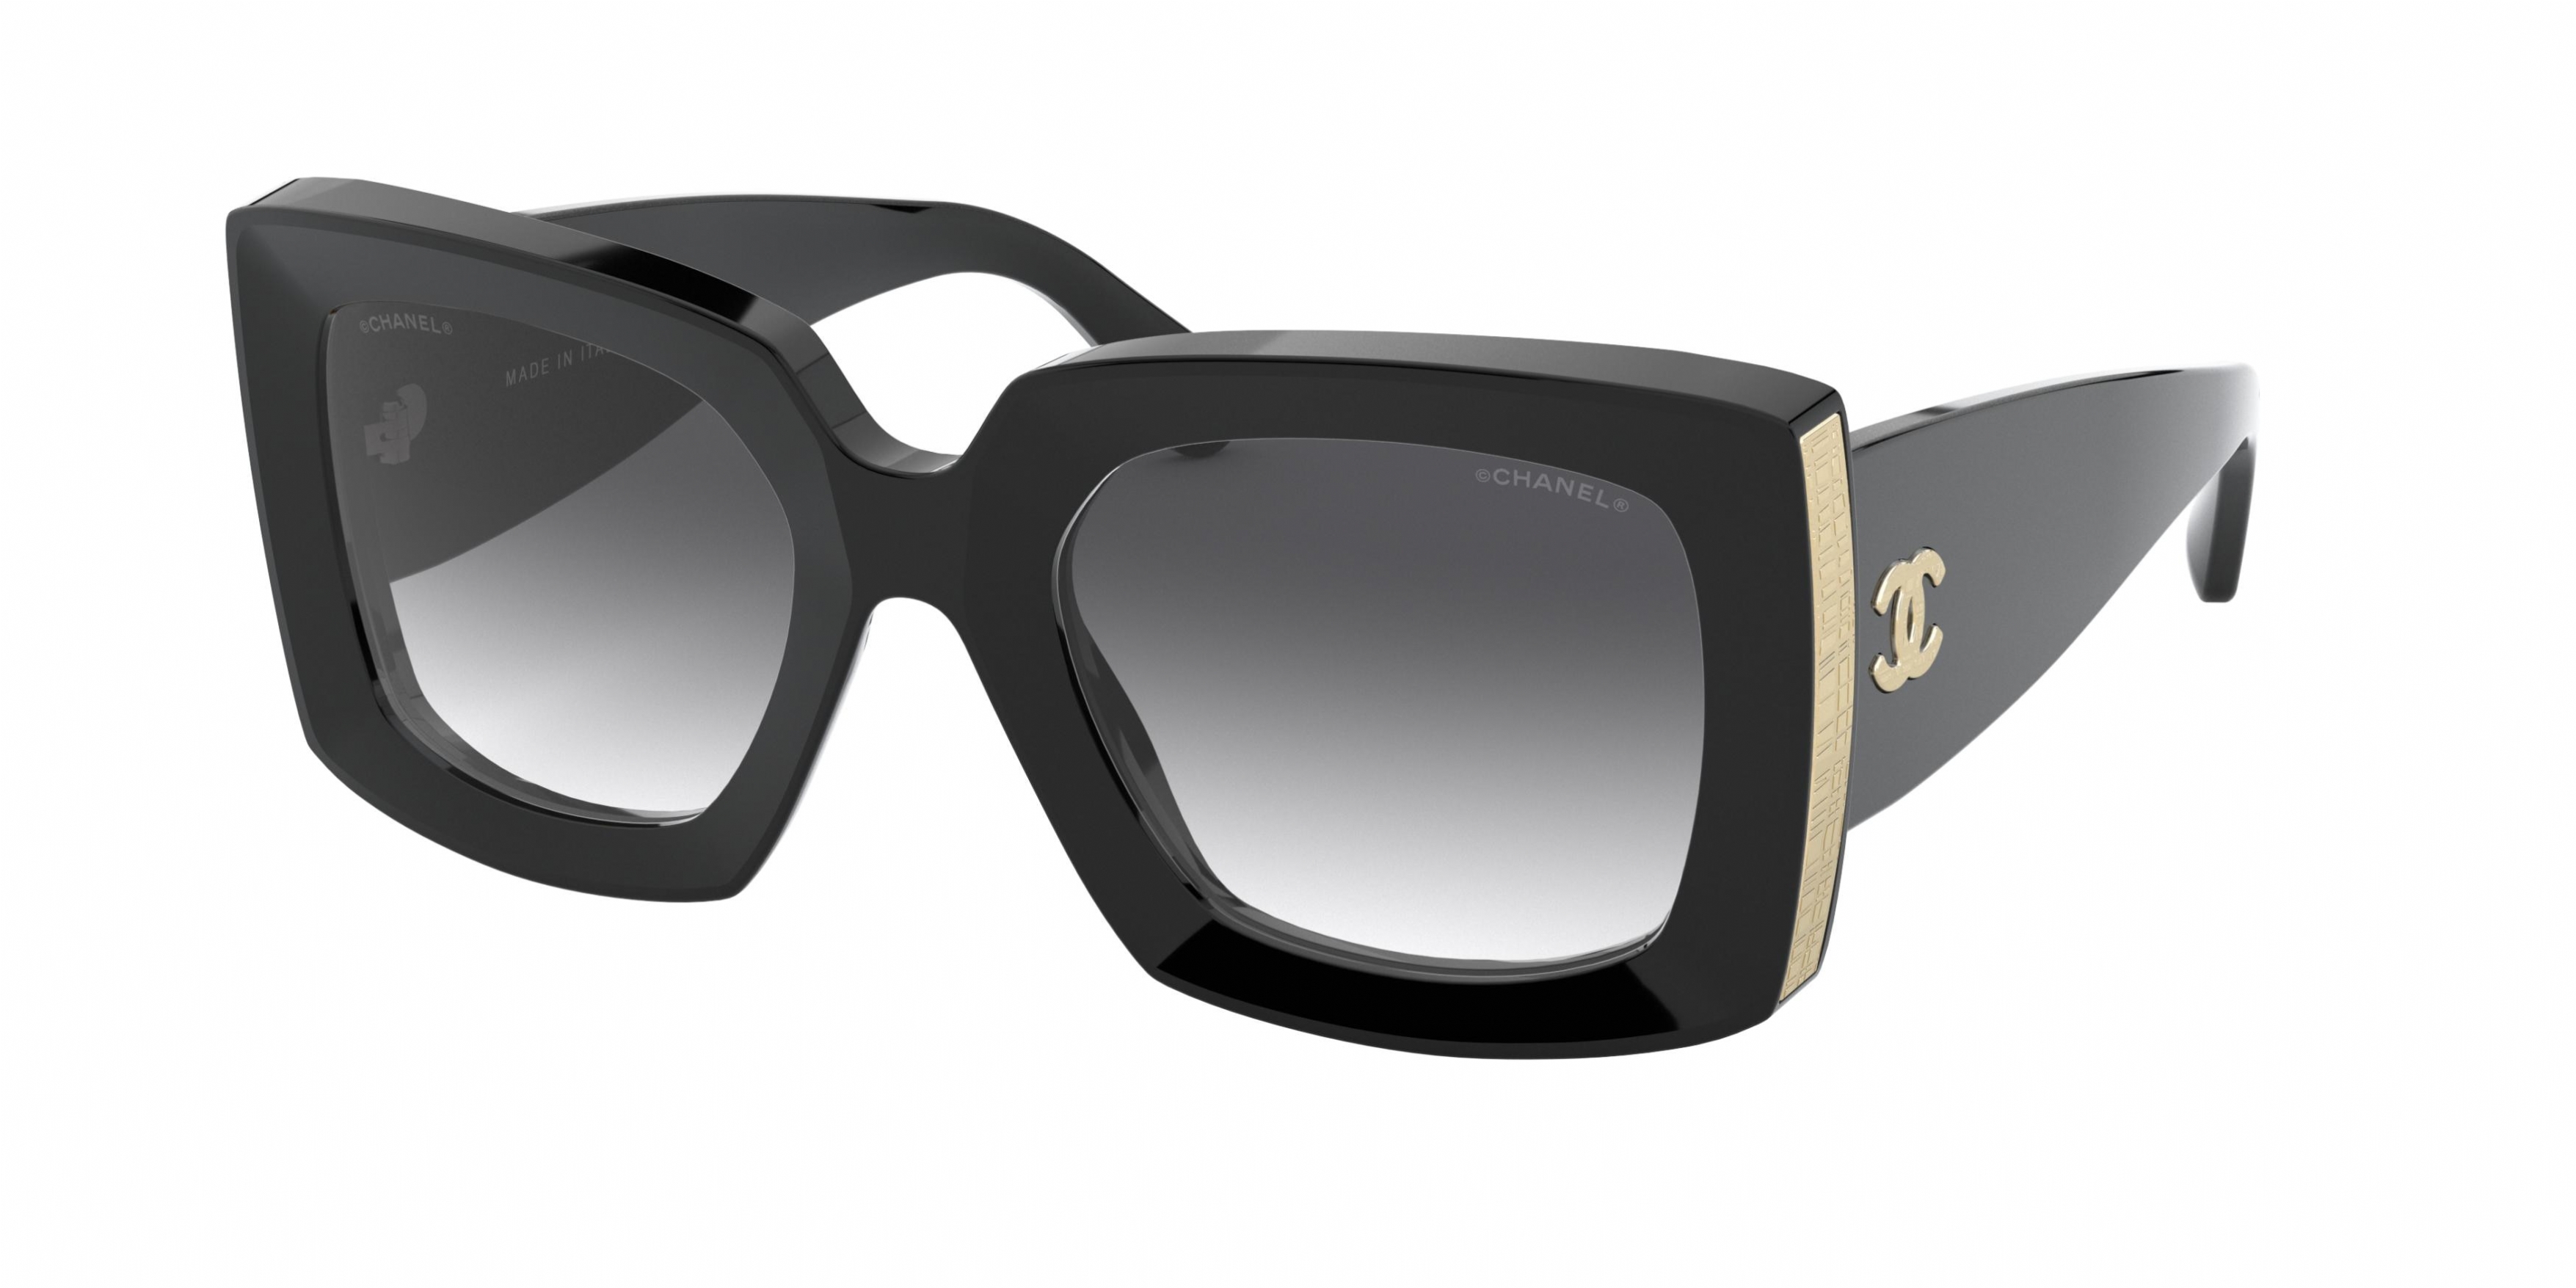 Chanel 5435 Sunglasses